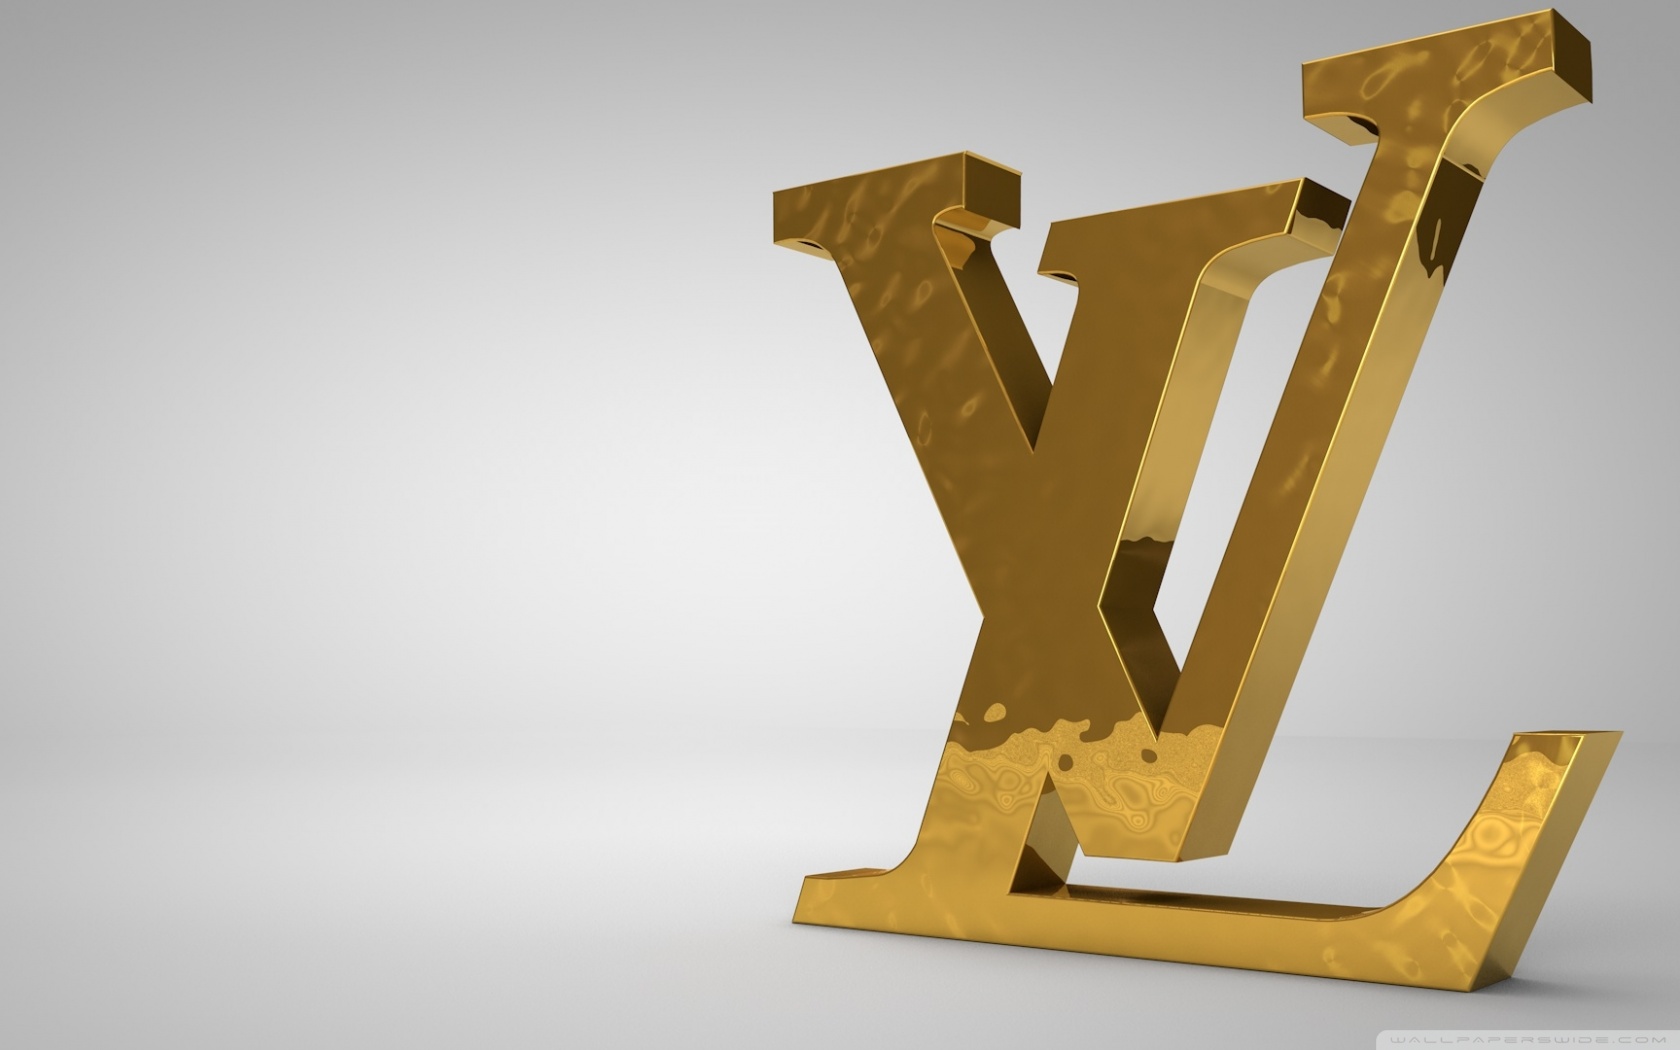 Louis Vuitton 3D Wallpapers - Top Free Louis Vuitton 3D